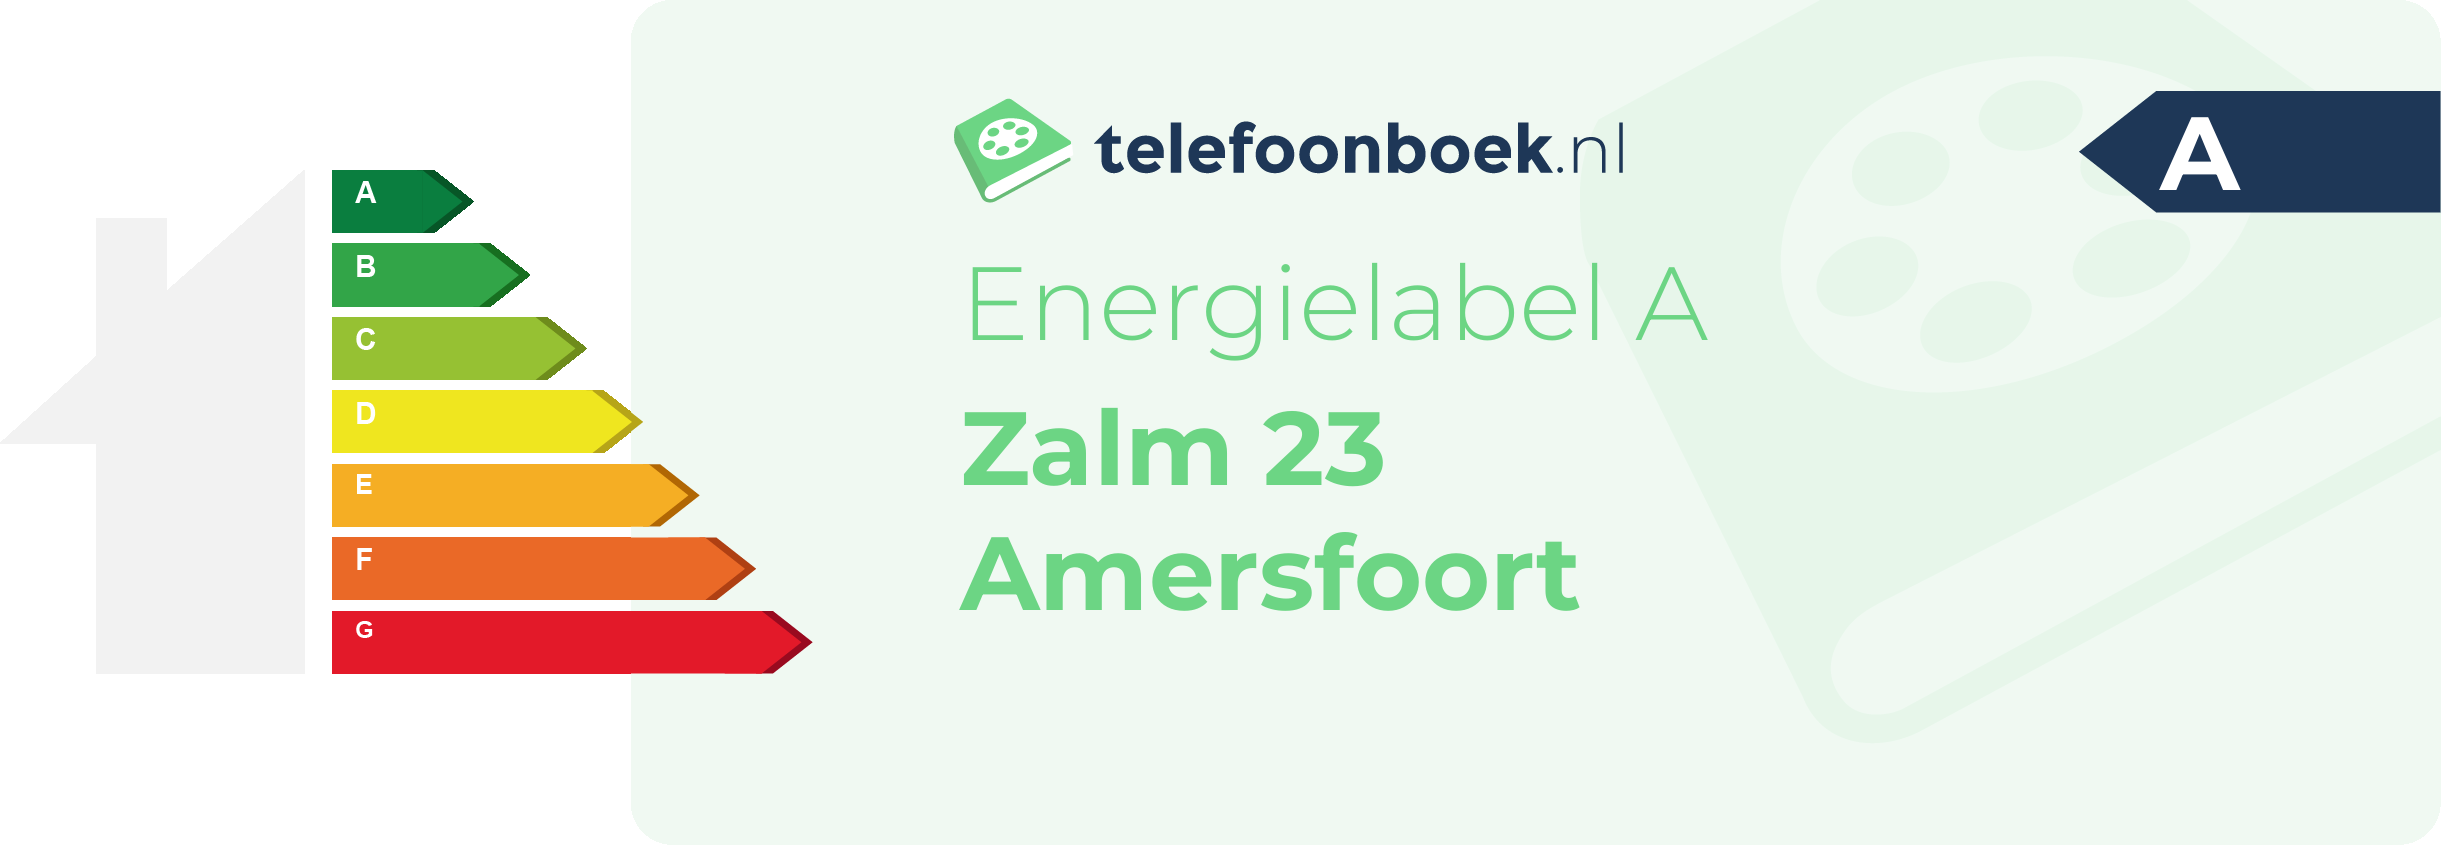 Energielabel Zalm 23 Amersfoort